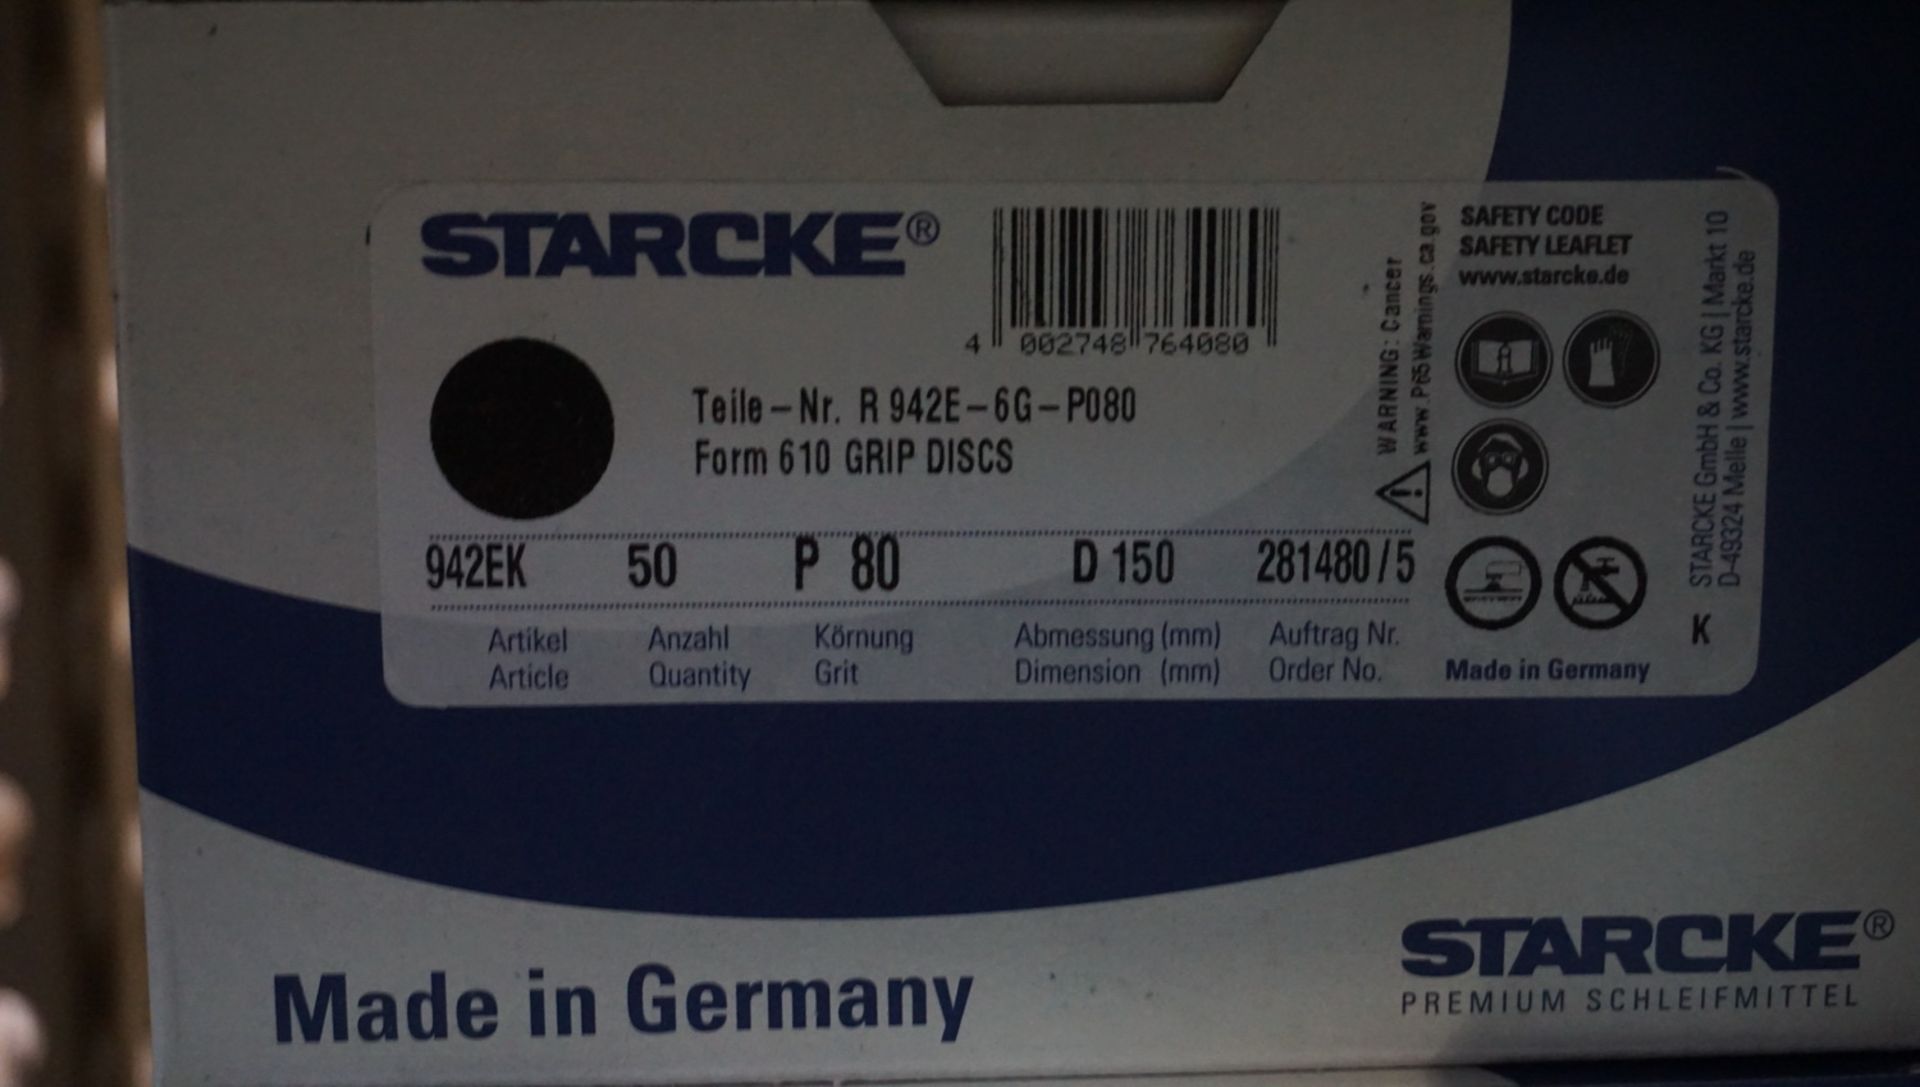 BOXES - STARCKE 6" DIA P80 GRIP DISCS (50 DISCS / BOX) - Image 2 of 3